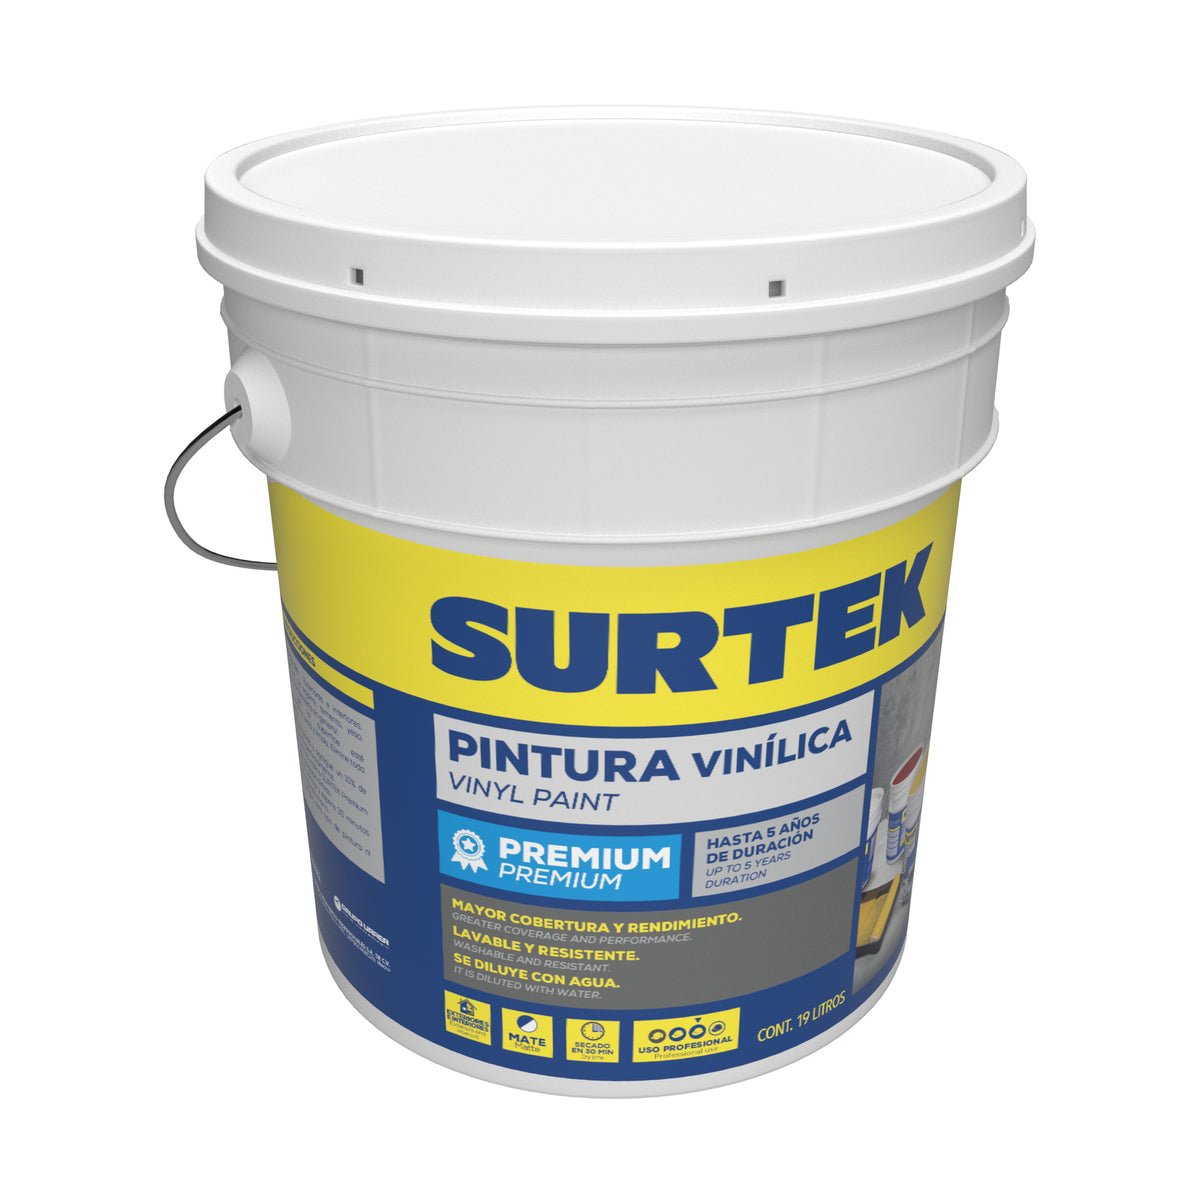 Cubeta de pintura vinílica premium 19 Lt Surtek - FERRETERÍA WITZI